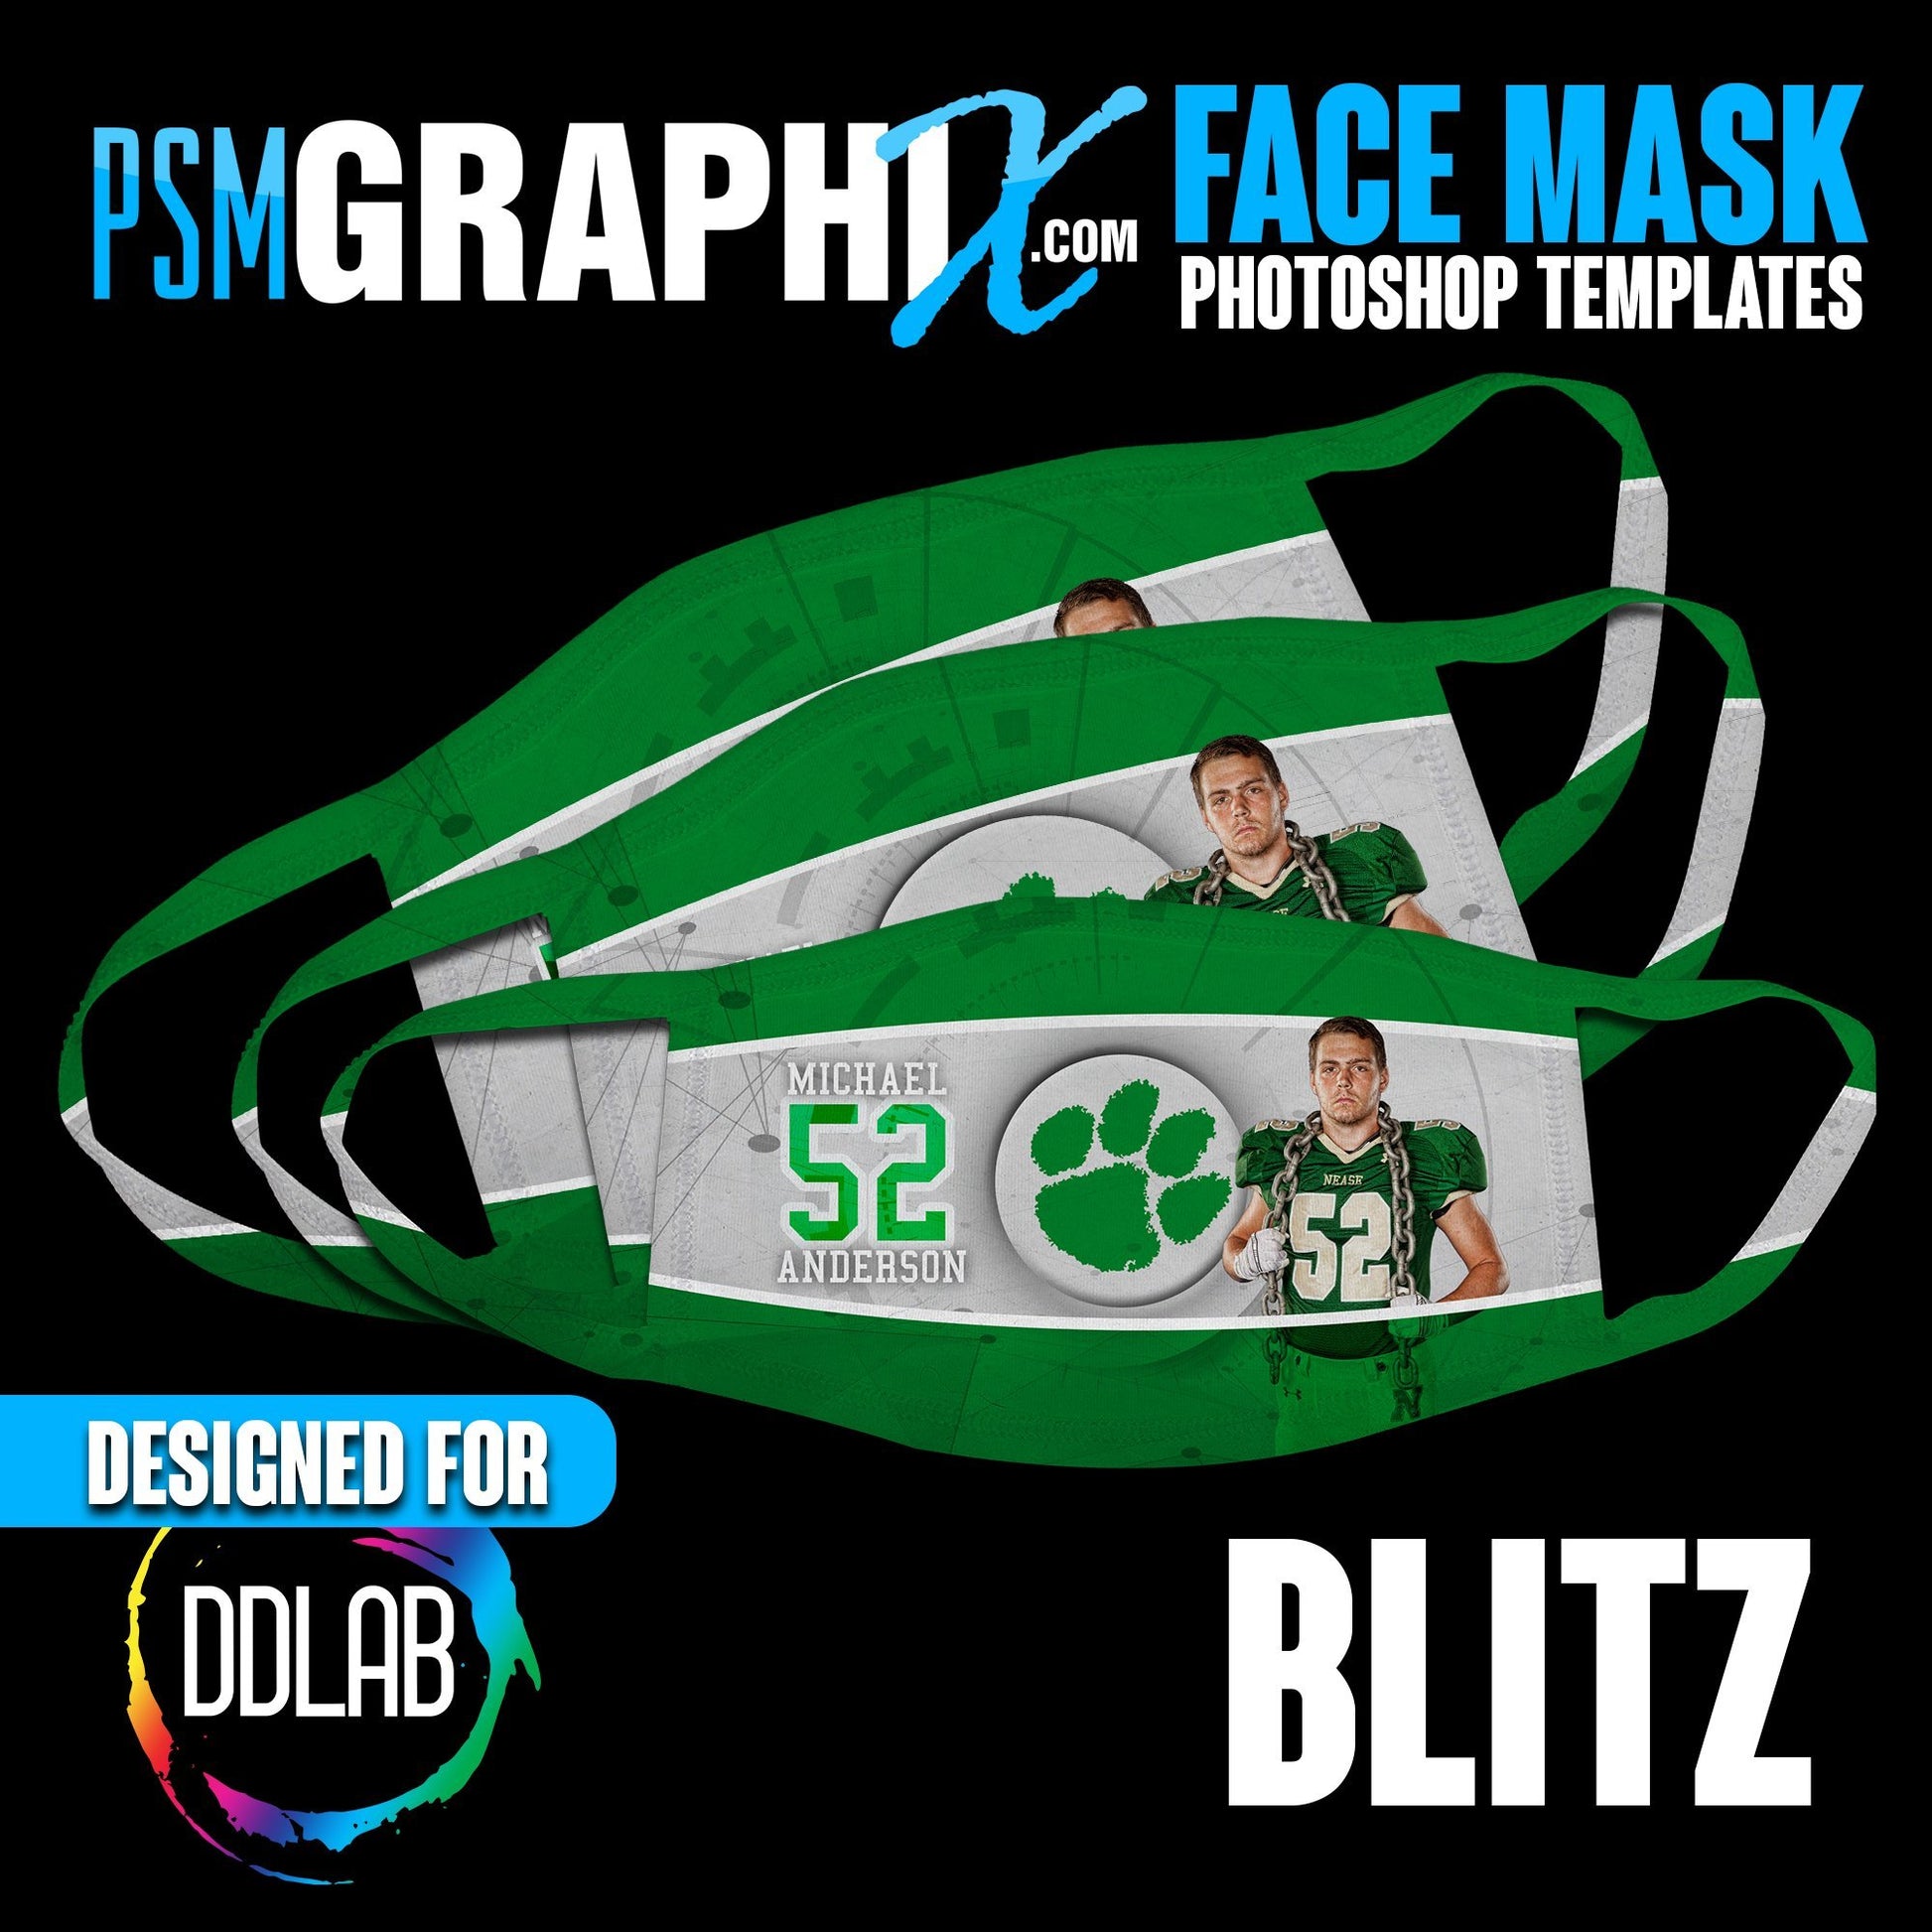 BLITZ - Face Mask Template Set (DDLAB) 3 Sizes-Photoshop Template - PSMGraphix